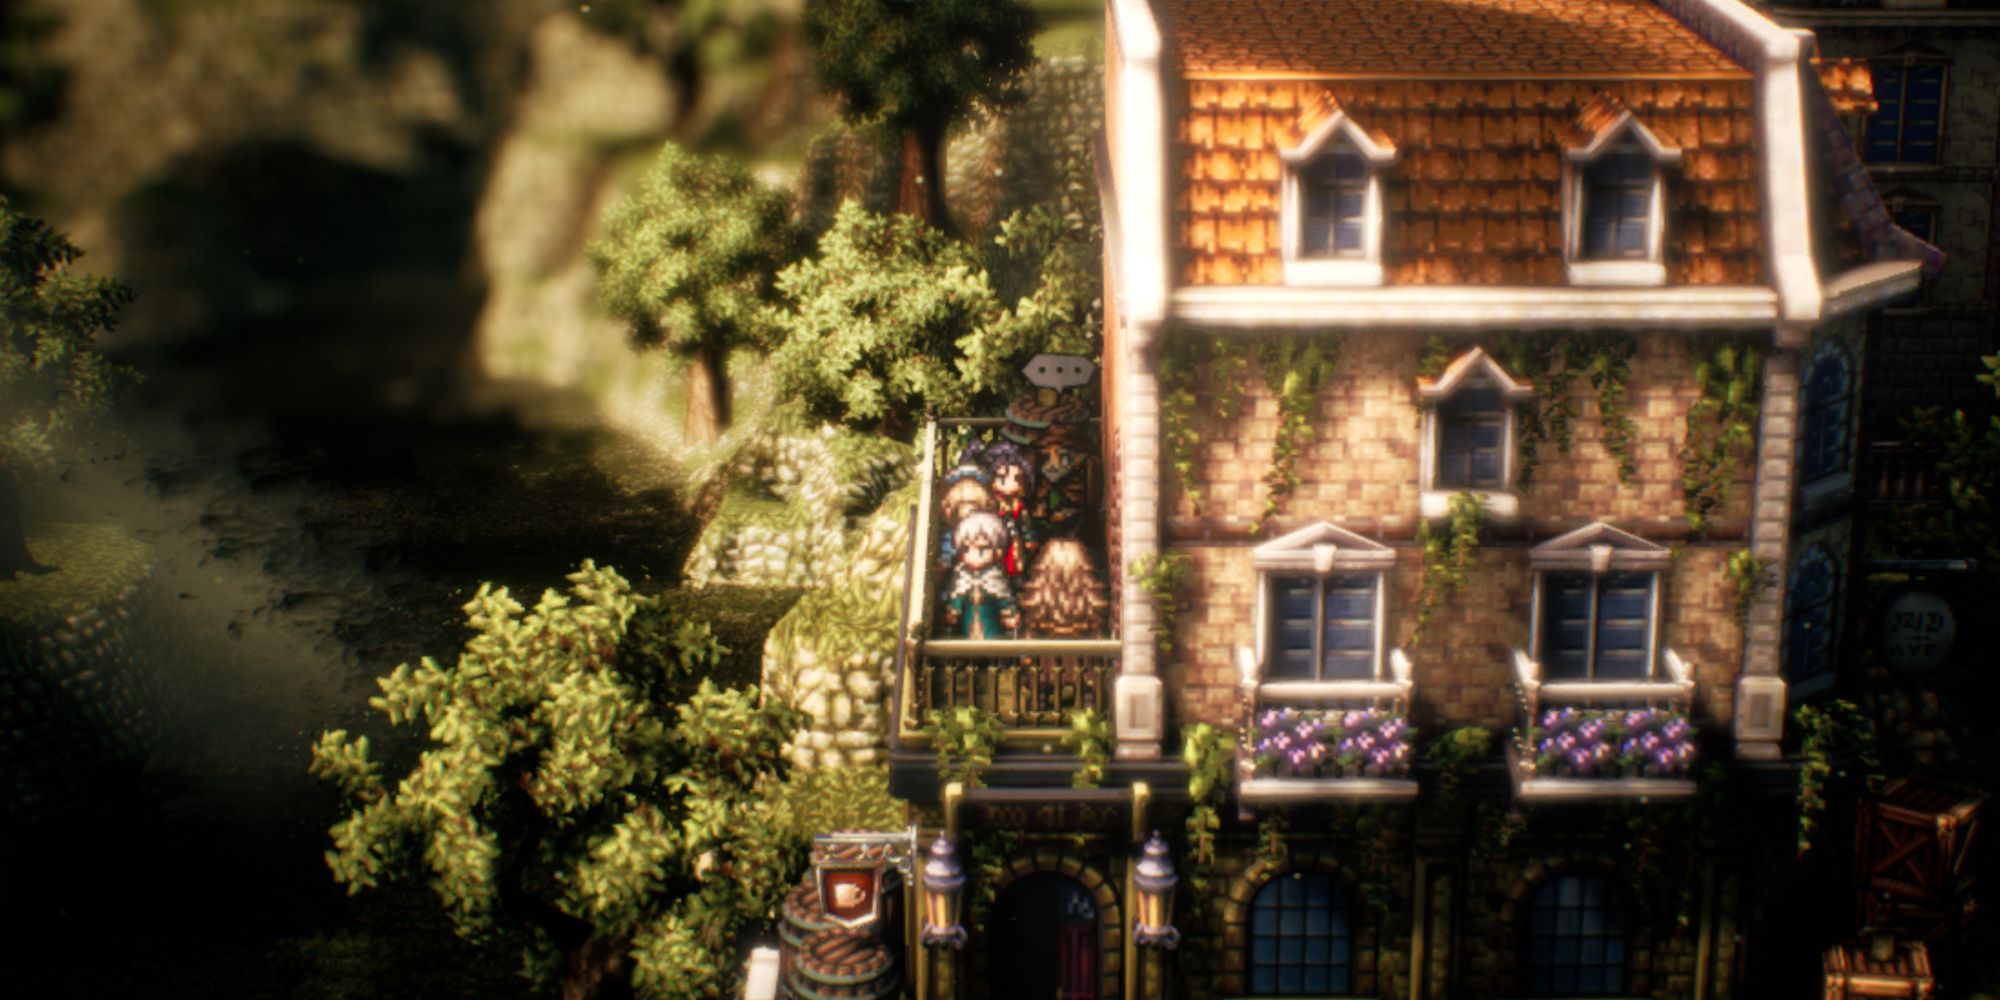 Octopath traveler 2, Hikari, Castti, Osvald, and Temenos standing on the balcony of Clockbank's Tavern next to an old man